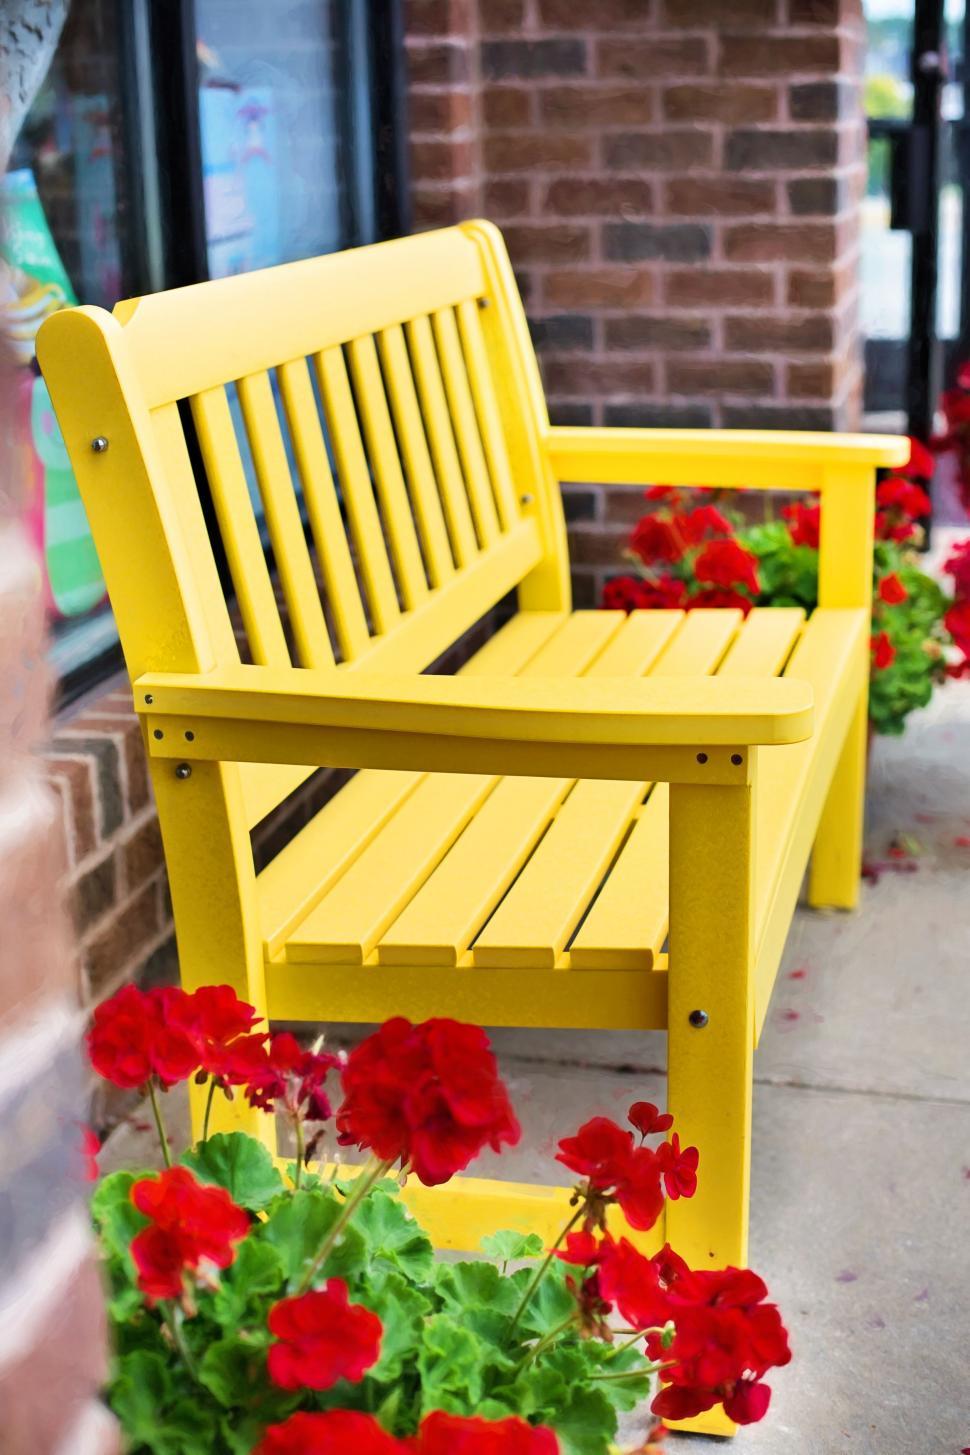 Free Image of Yellow Bench  